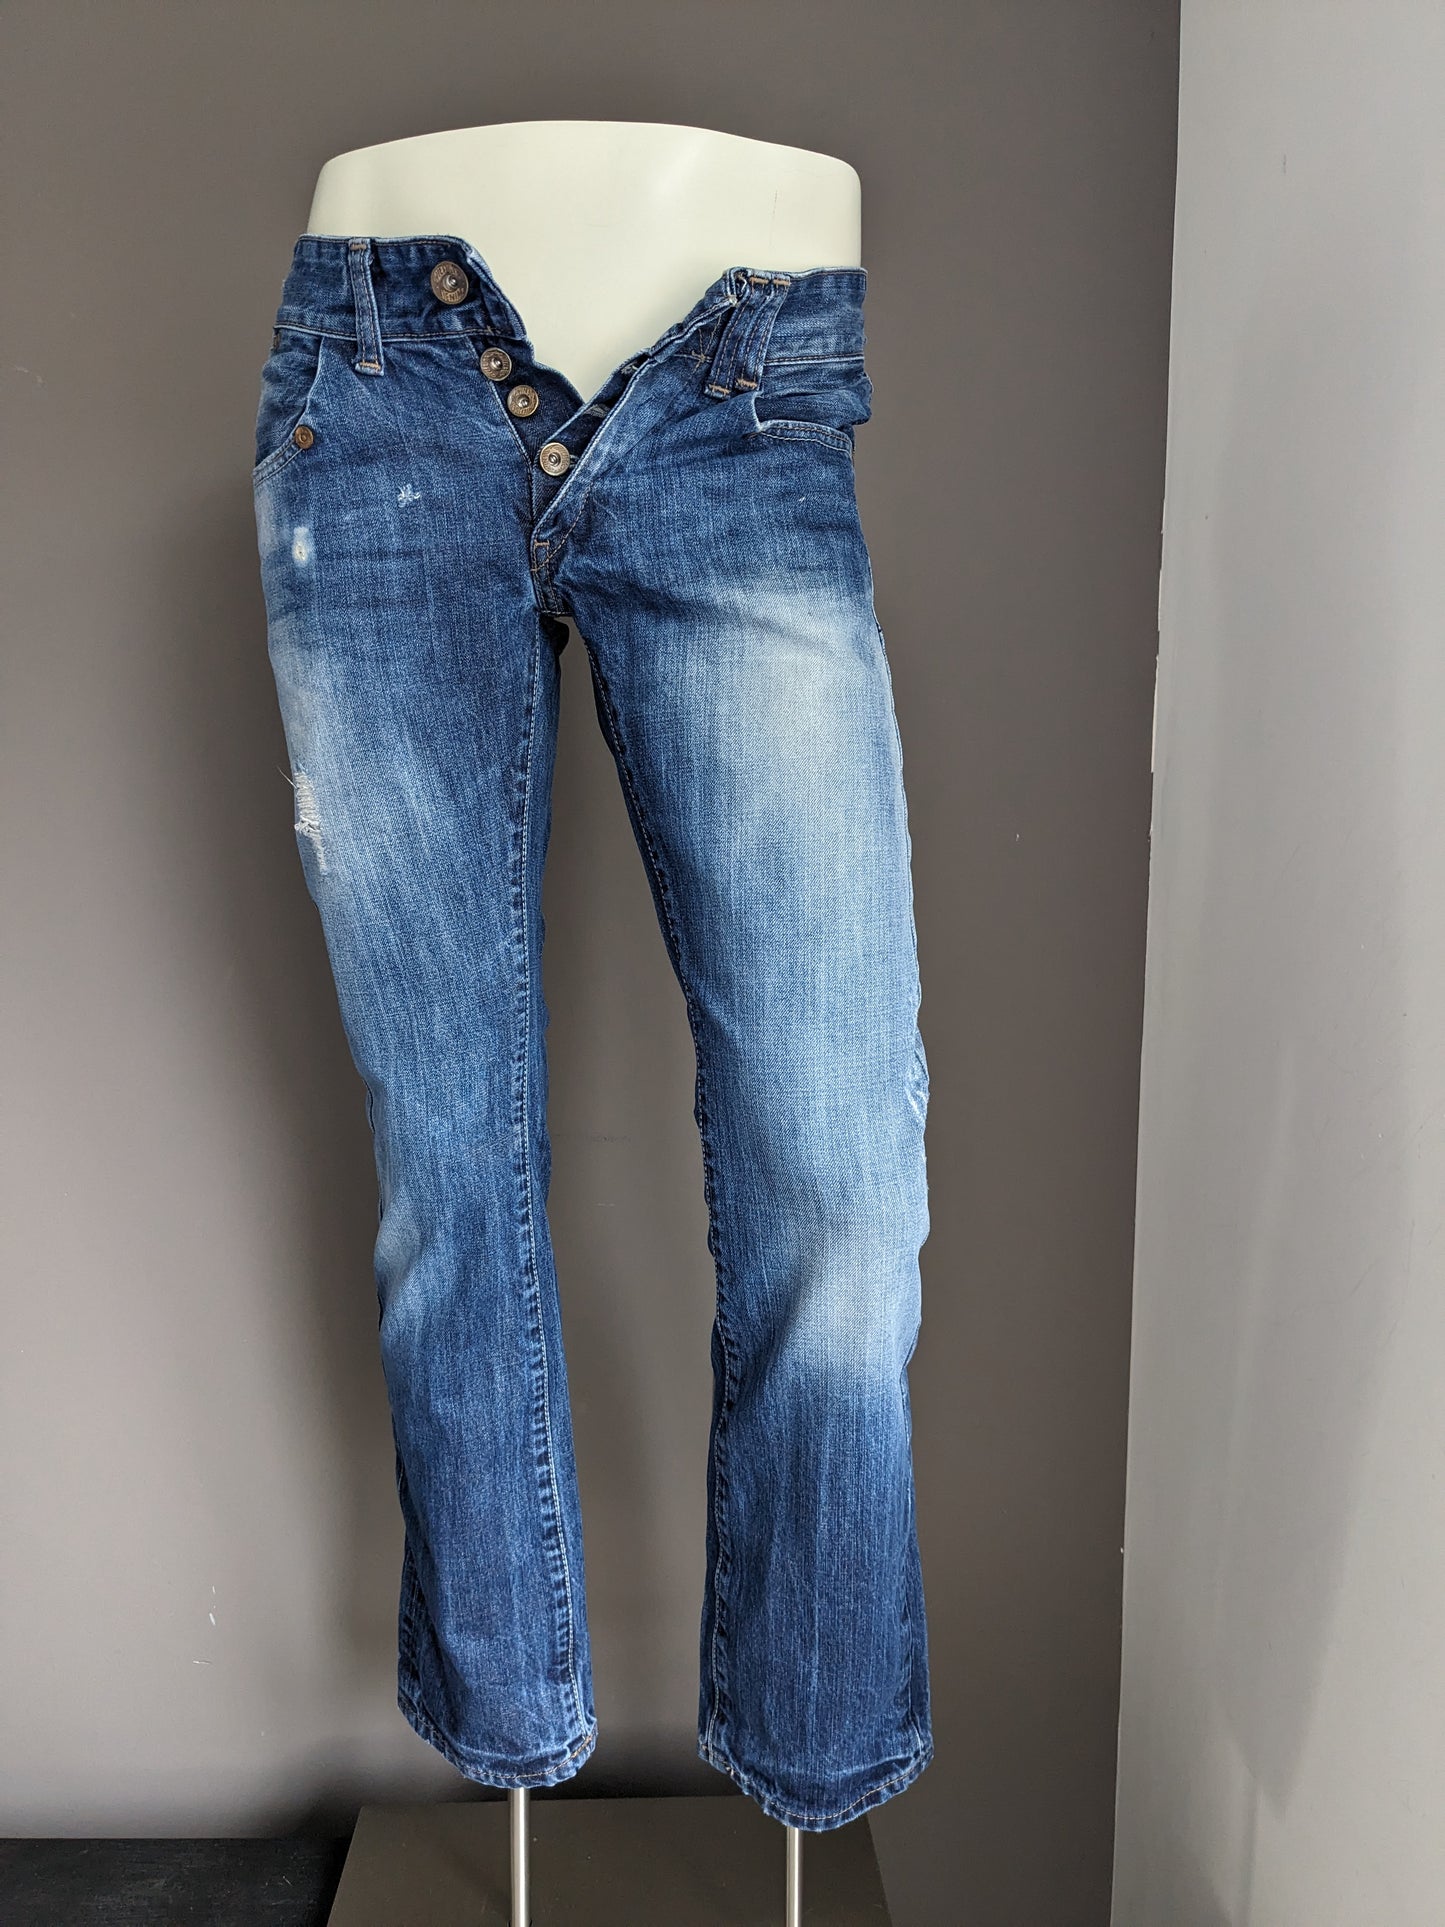 Tommy Hilfiger jeans. Blauw gekleurd. Maat W29 - L32. type Rogar. Regular Fit.